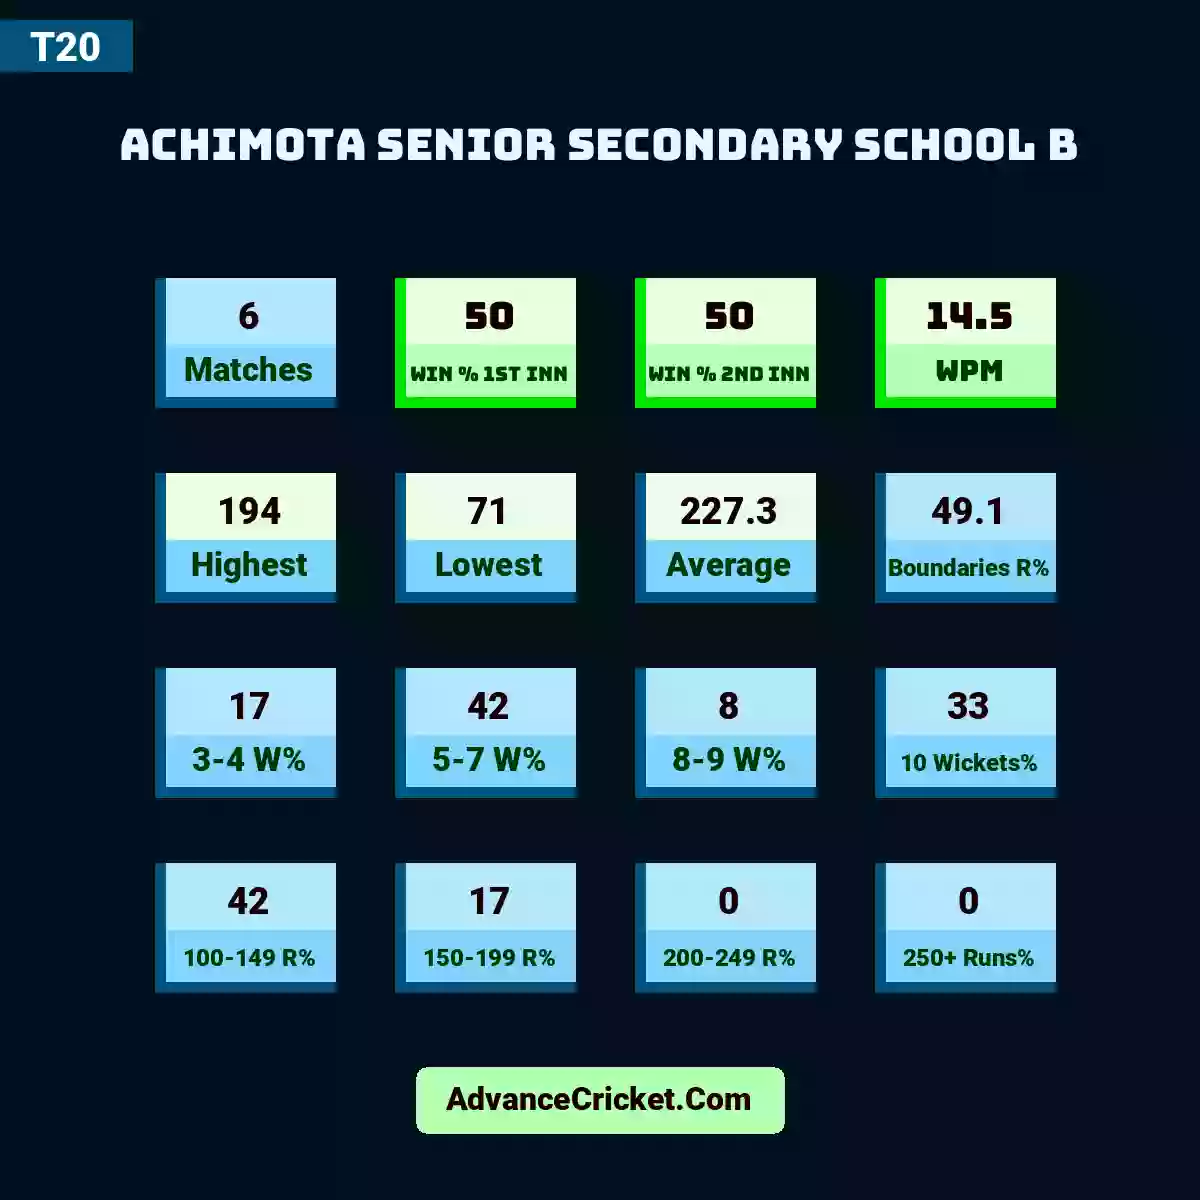 Image showing Achimota Senior Secondary School B with Matches: 6, Win % 1st Inn: 50, Win % 2nd Inn: 50, WPM: 14.5, Highest: 194, Lowest: 71, Average: 227.3, Boundaries R%: 49.1, 3-4 W%: 17, 5-7 W%: 42, 8-9 W%: 8, 10 Wickets%: 33, 100-149 R%: 42, 150-199 R%: 17, 200-249 R%: 0, 250+ Runs%: 0.